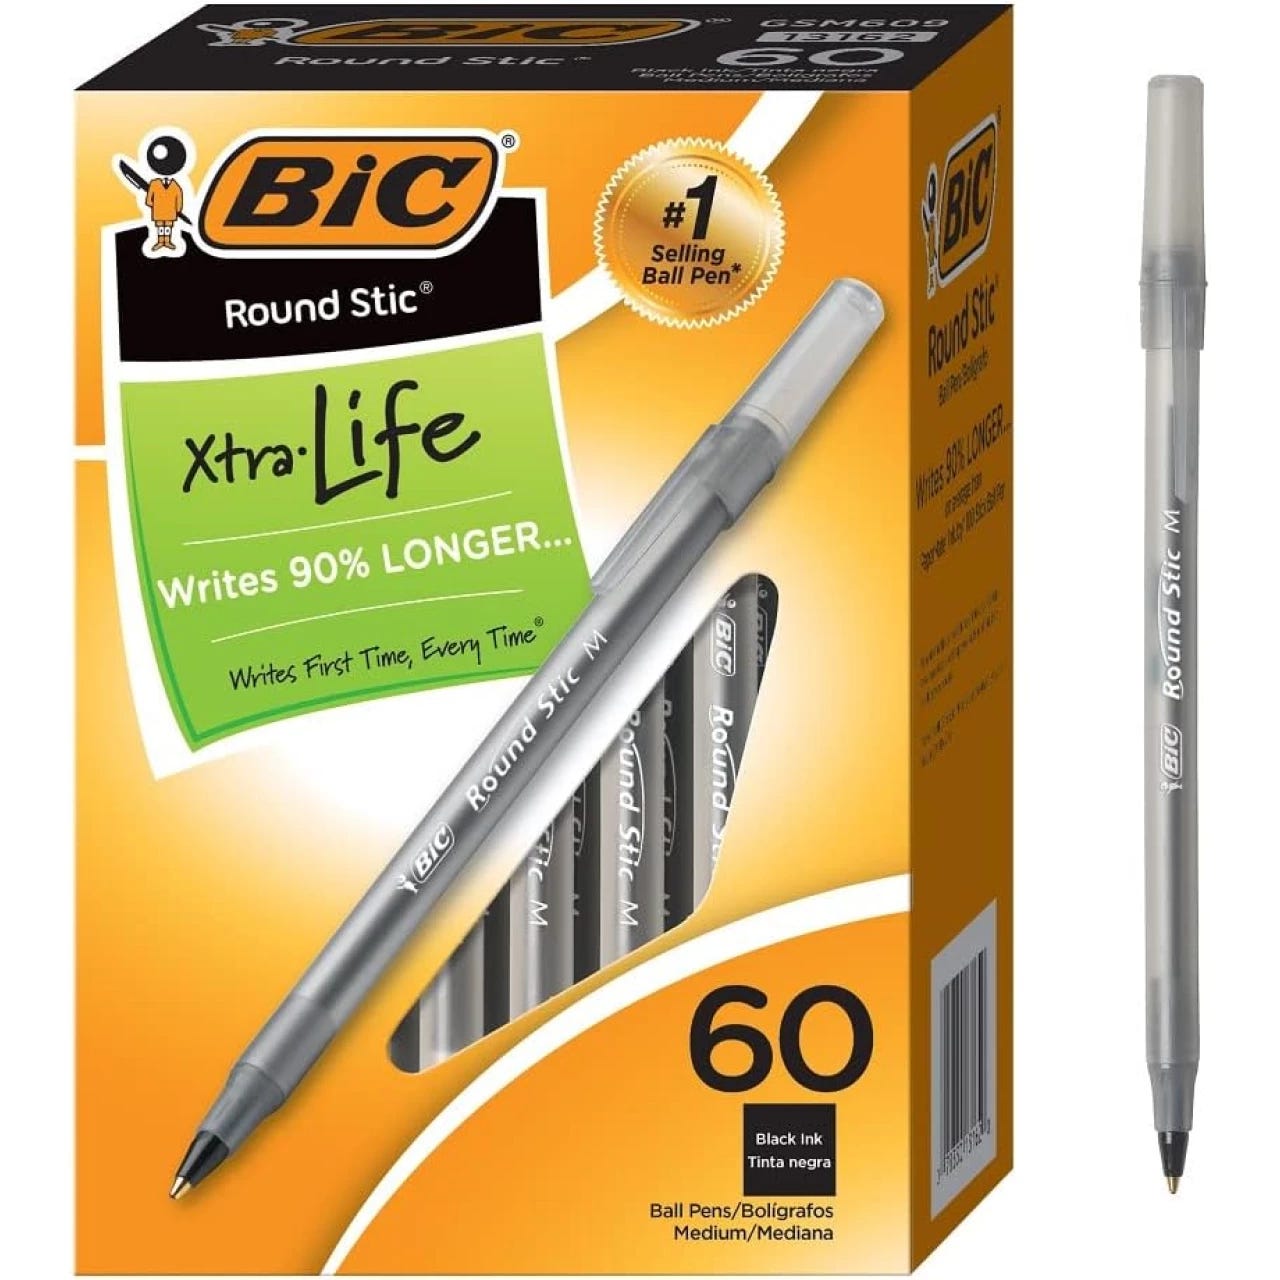 2023 Pen Comparison: Best Pens — Sharpie, BIC, iBayam, Pilot, by Catalina